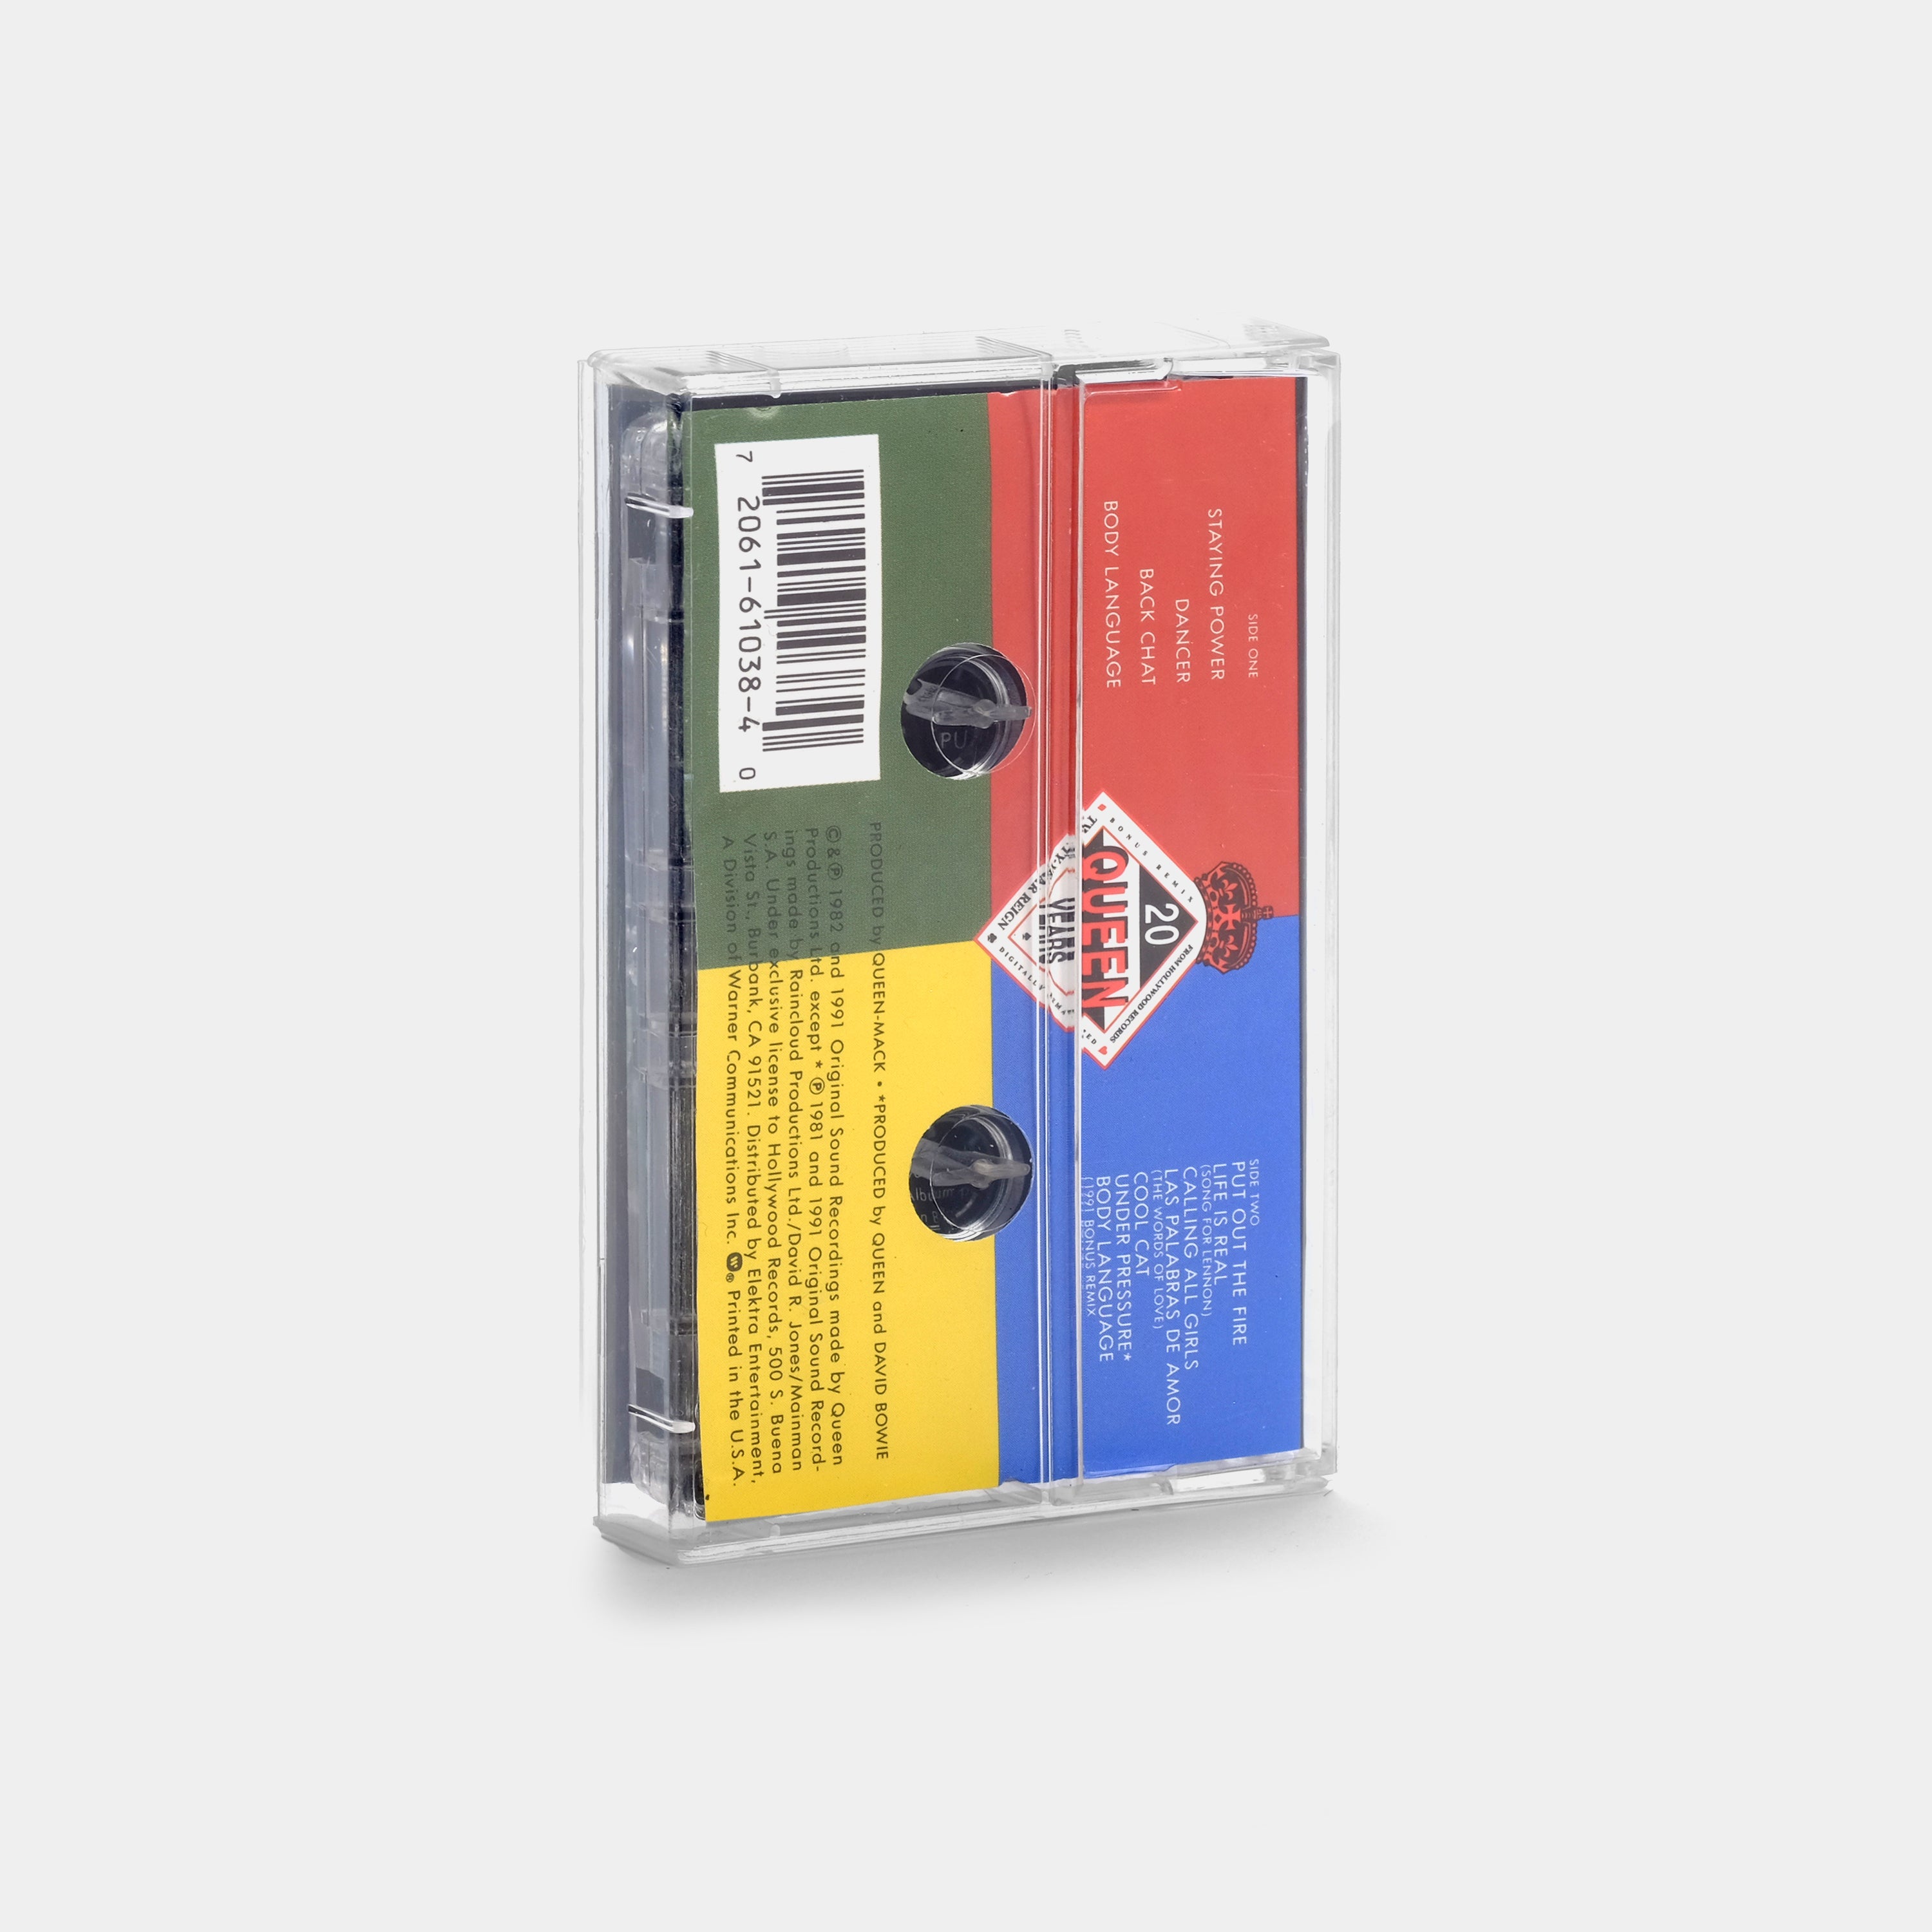 Queen - Hot Space Cassette Tape